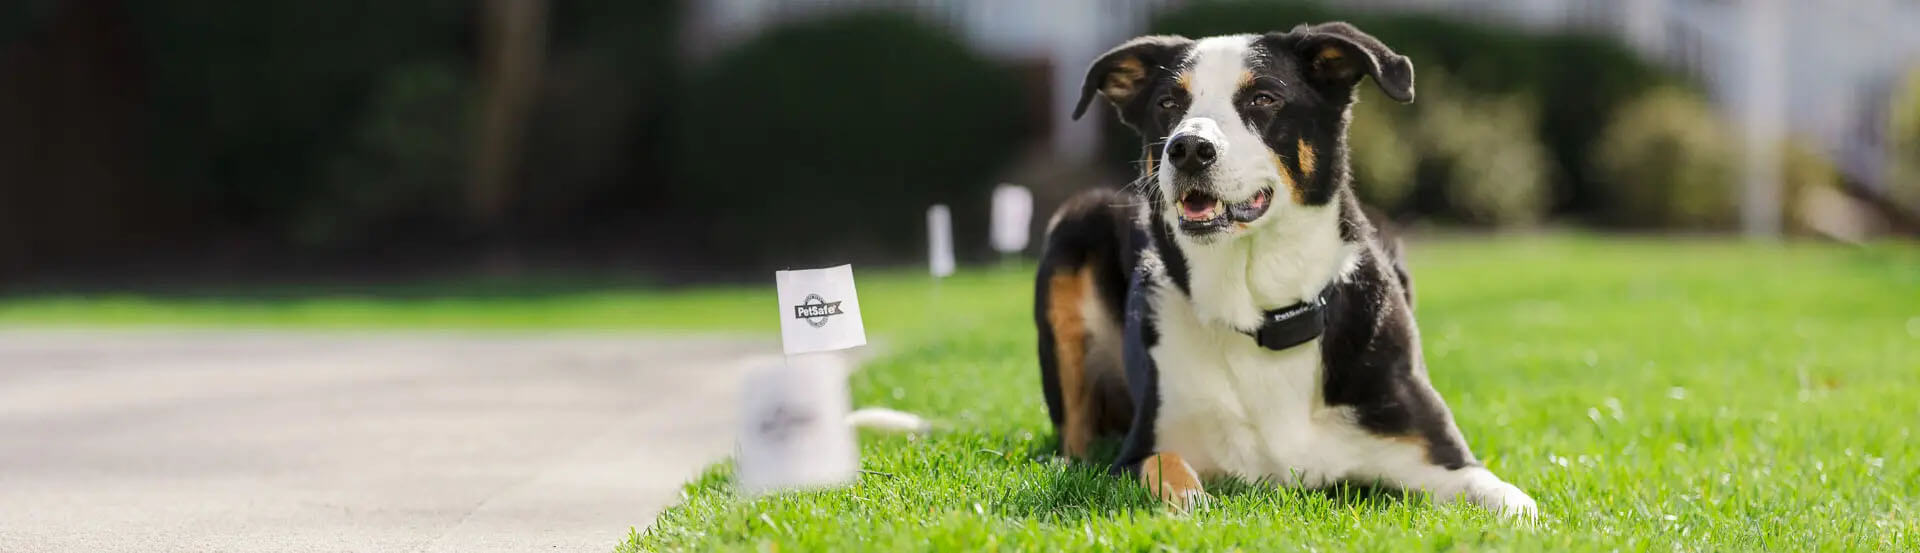 PetSafe Dog on Lawn